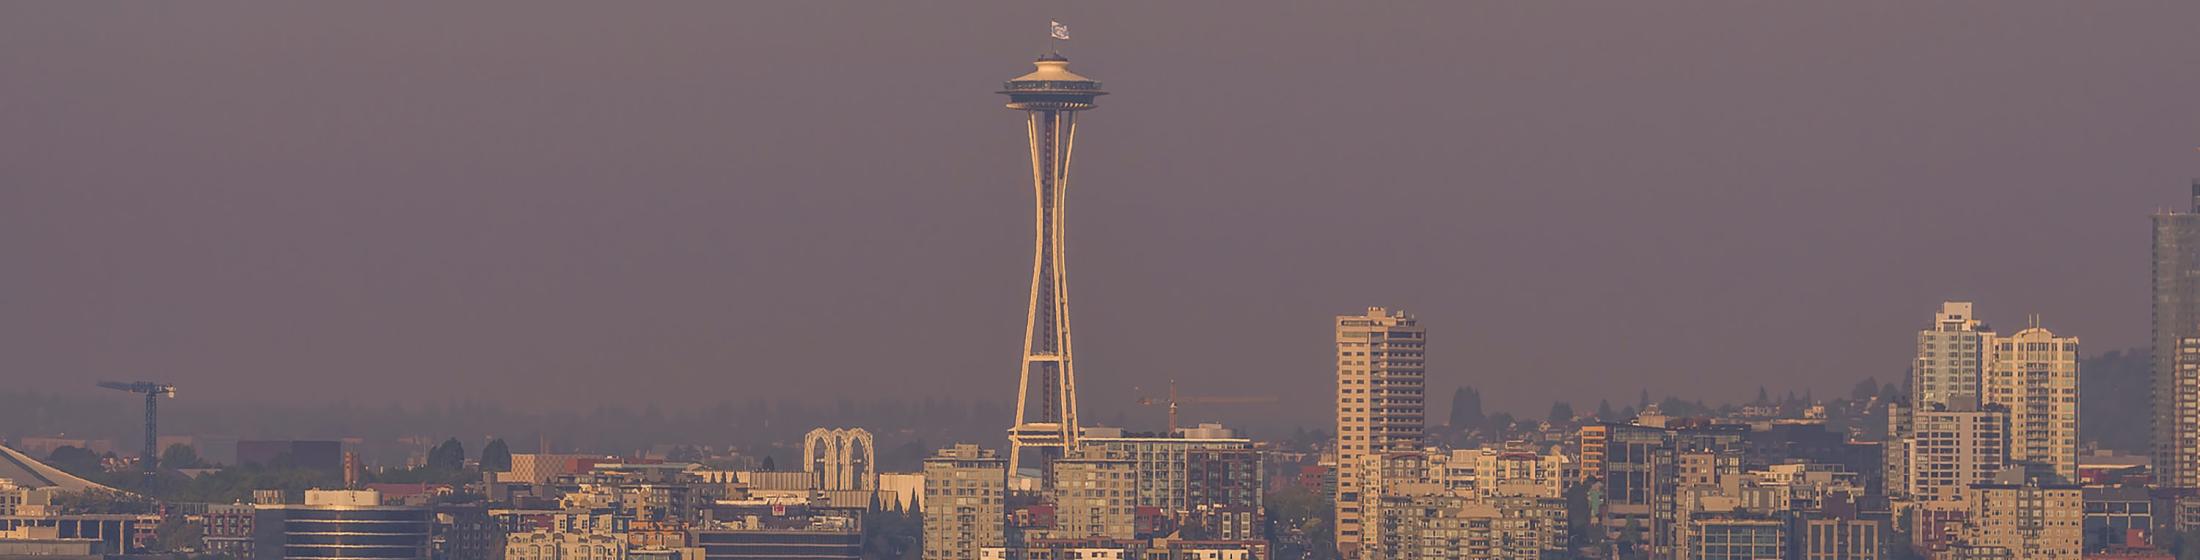 Smoky Seattle Skyline